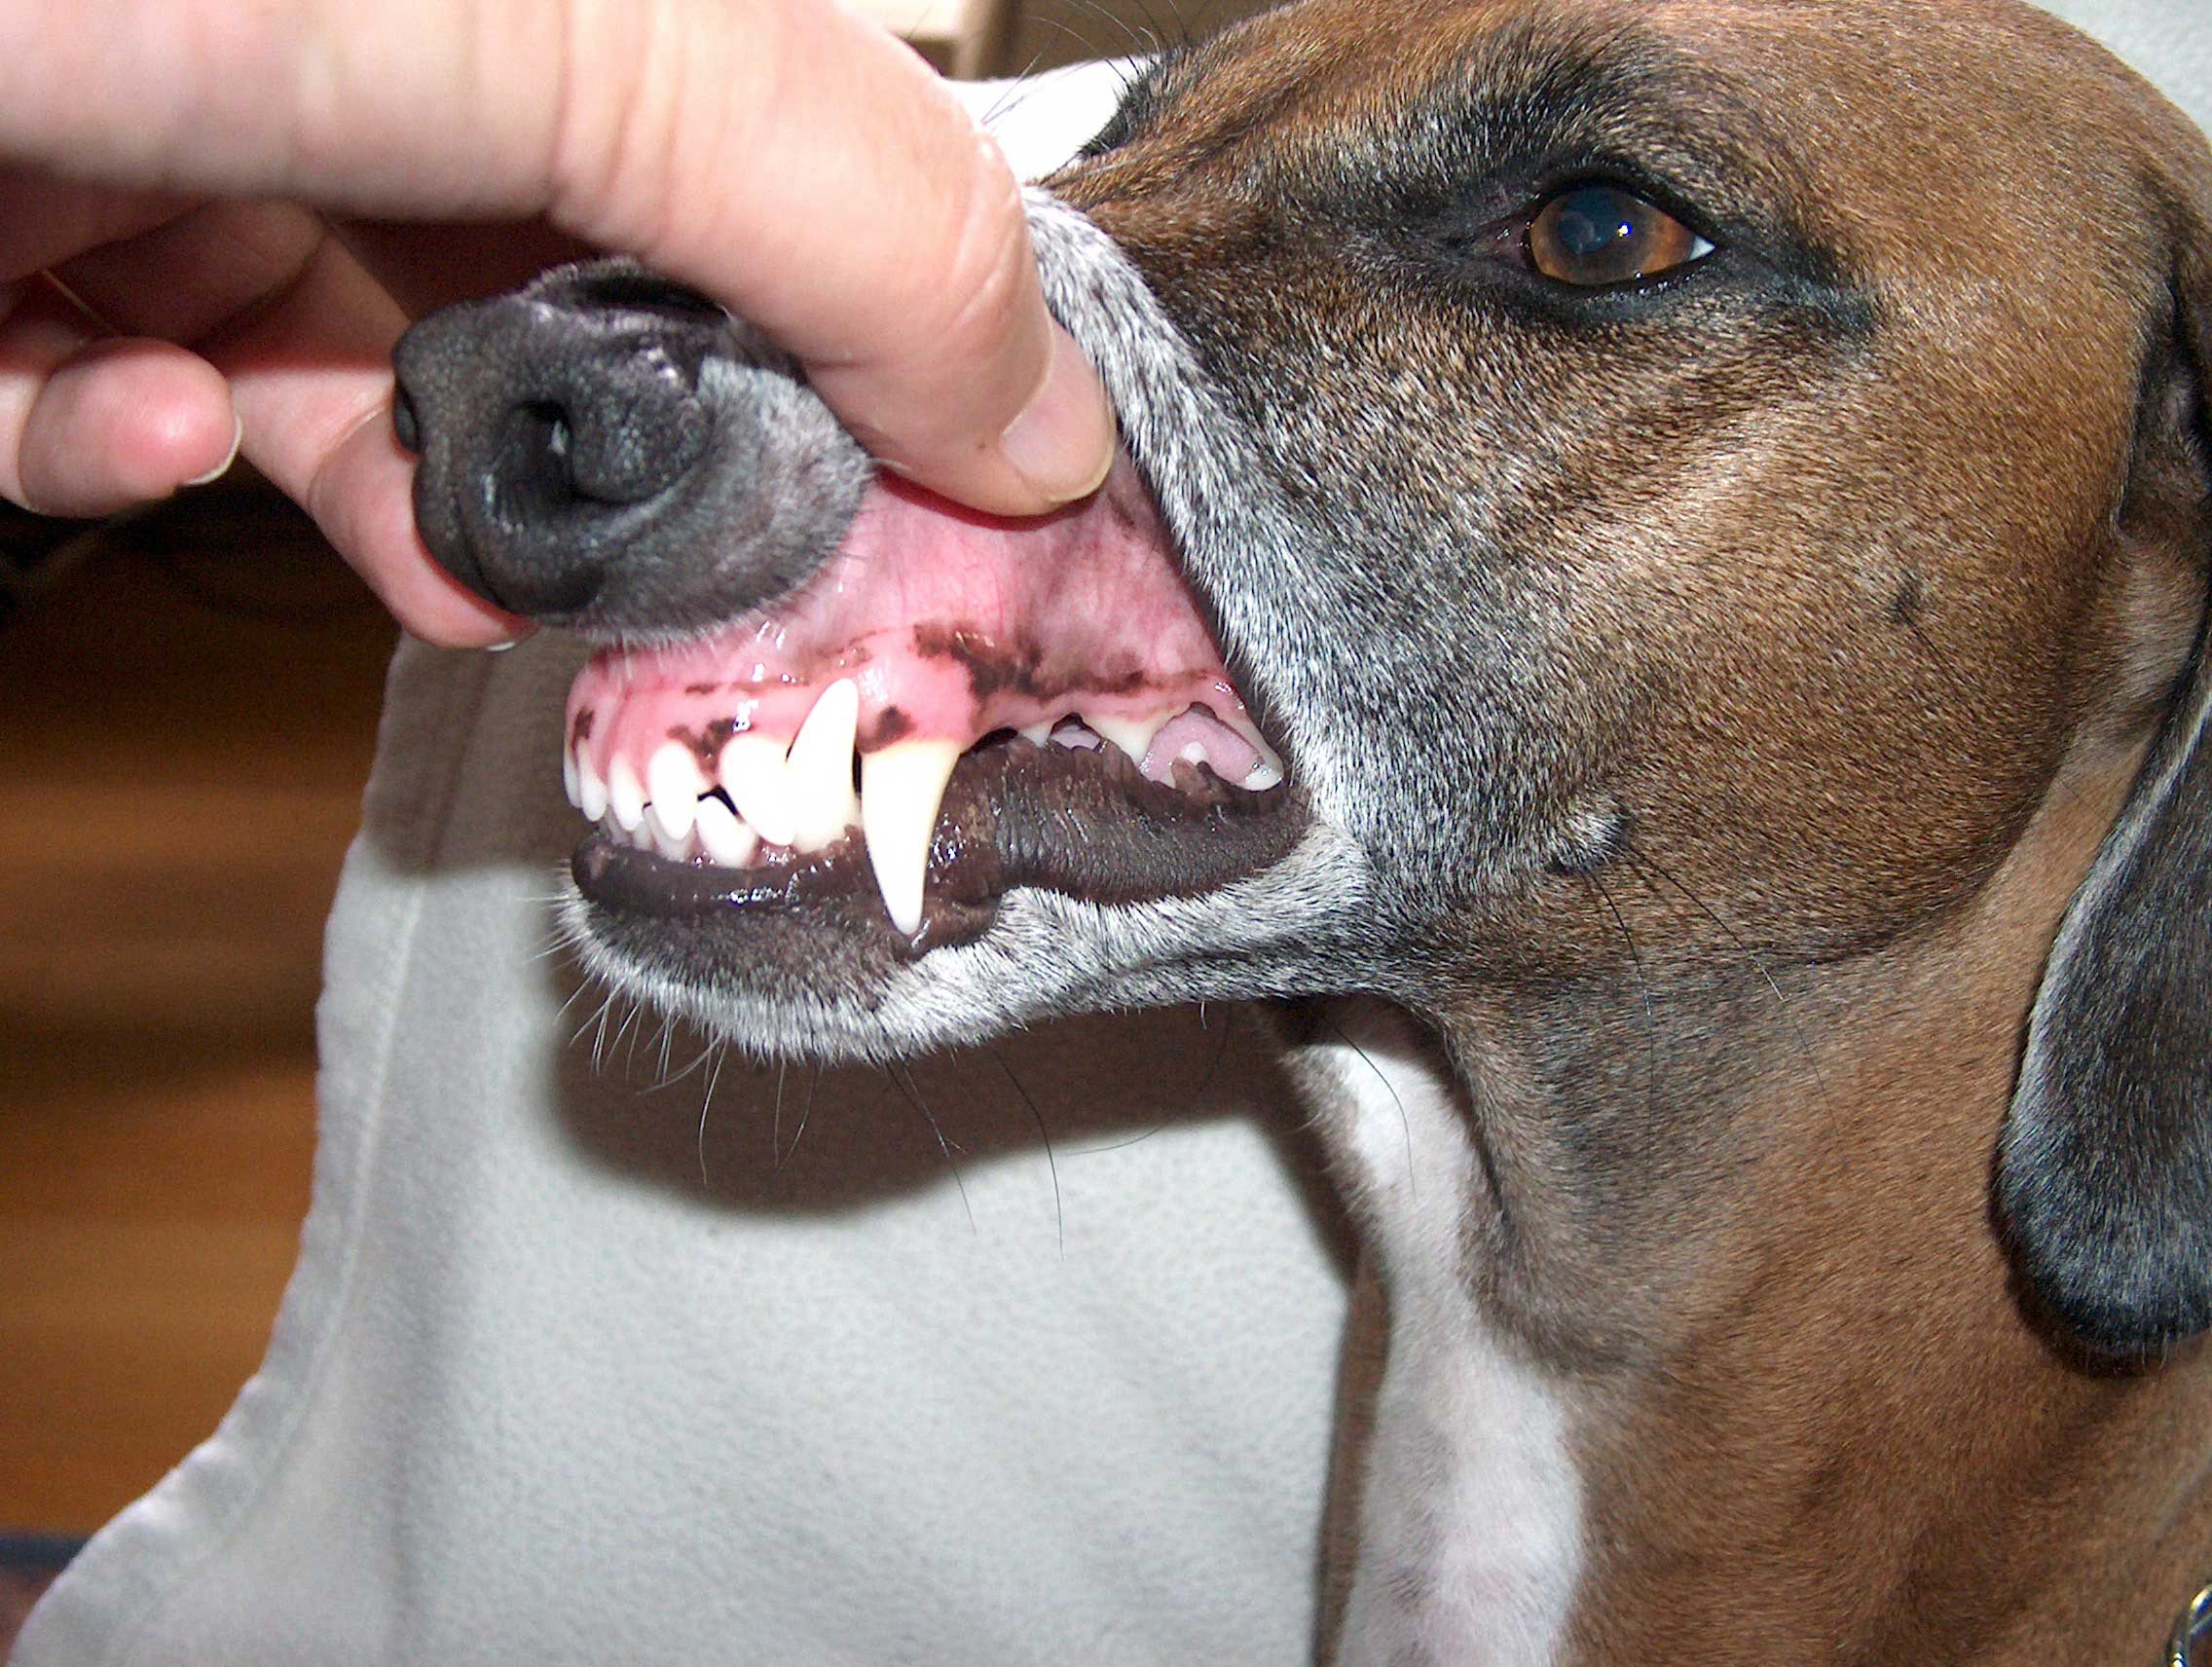 do dogs eat their puppy teeth